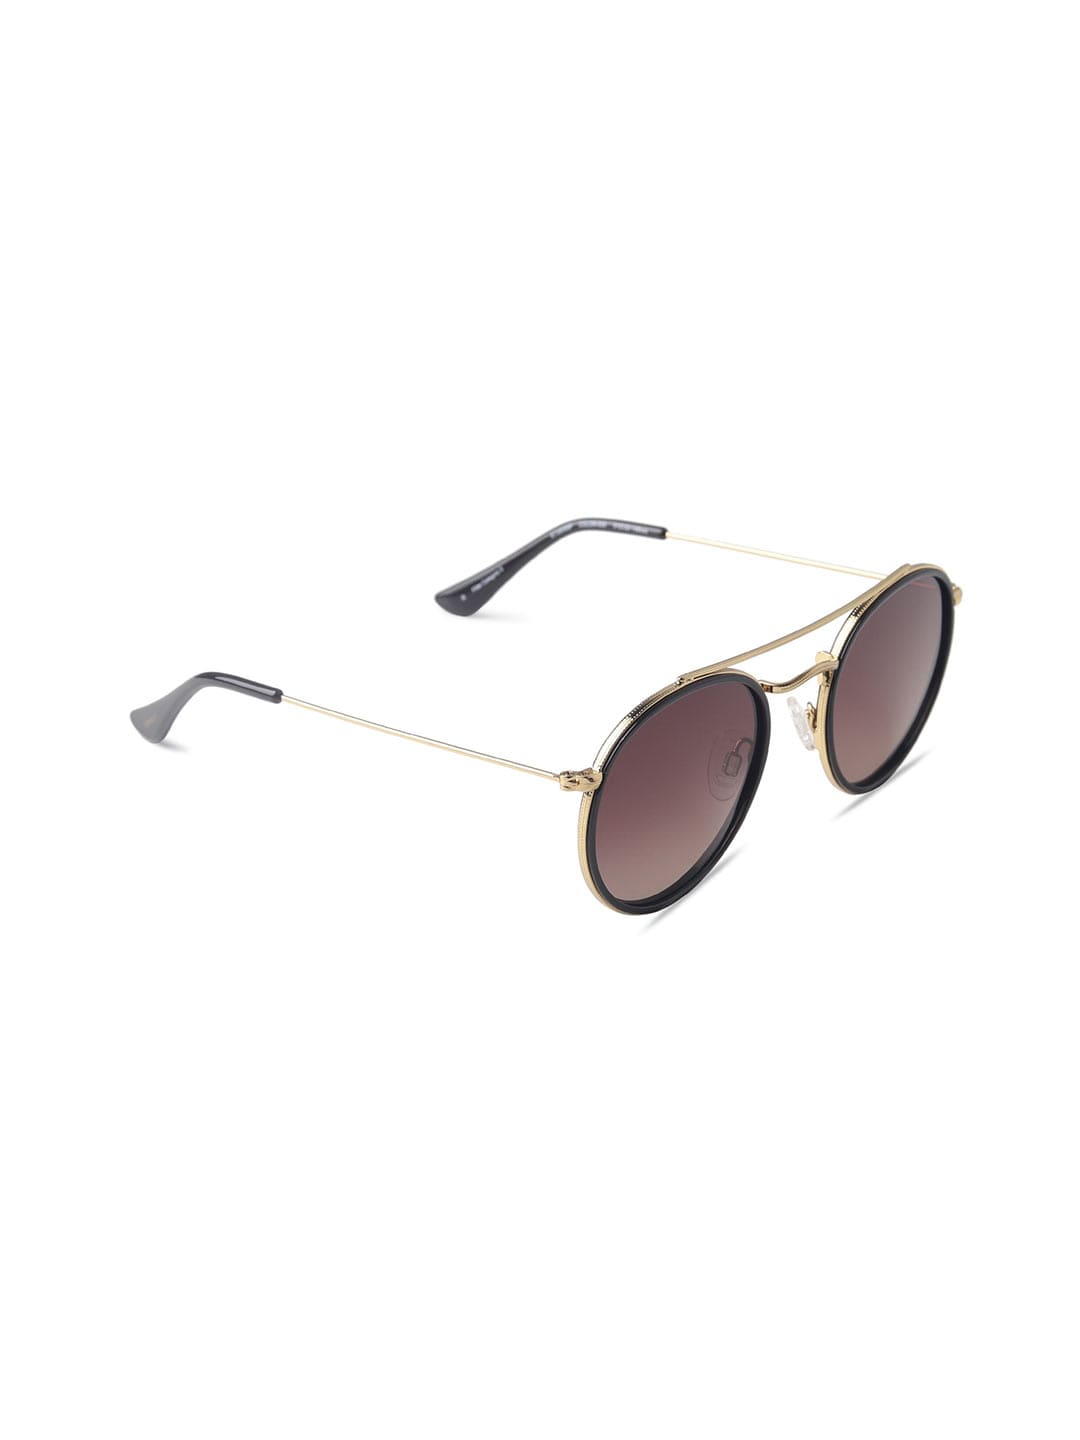 ESPRIT Women Brown Lens & Golden Browline Sunglasses with Polarised Lens ET39099P-51-535 Price in India